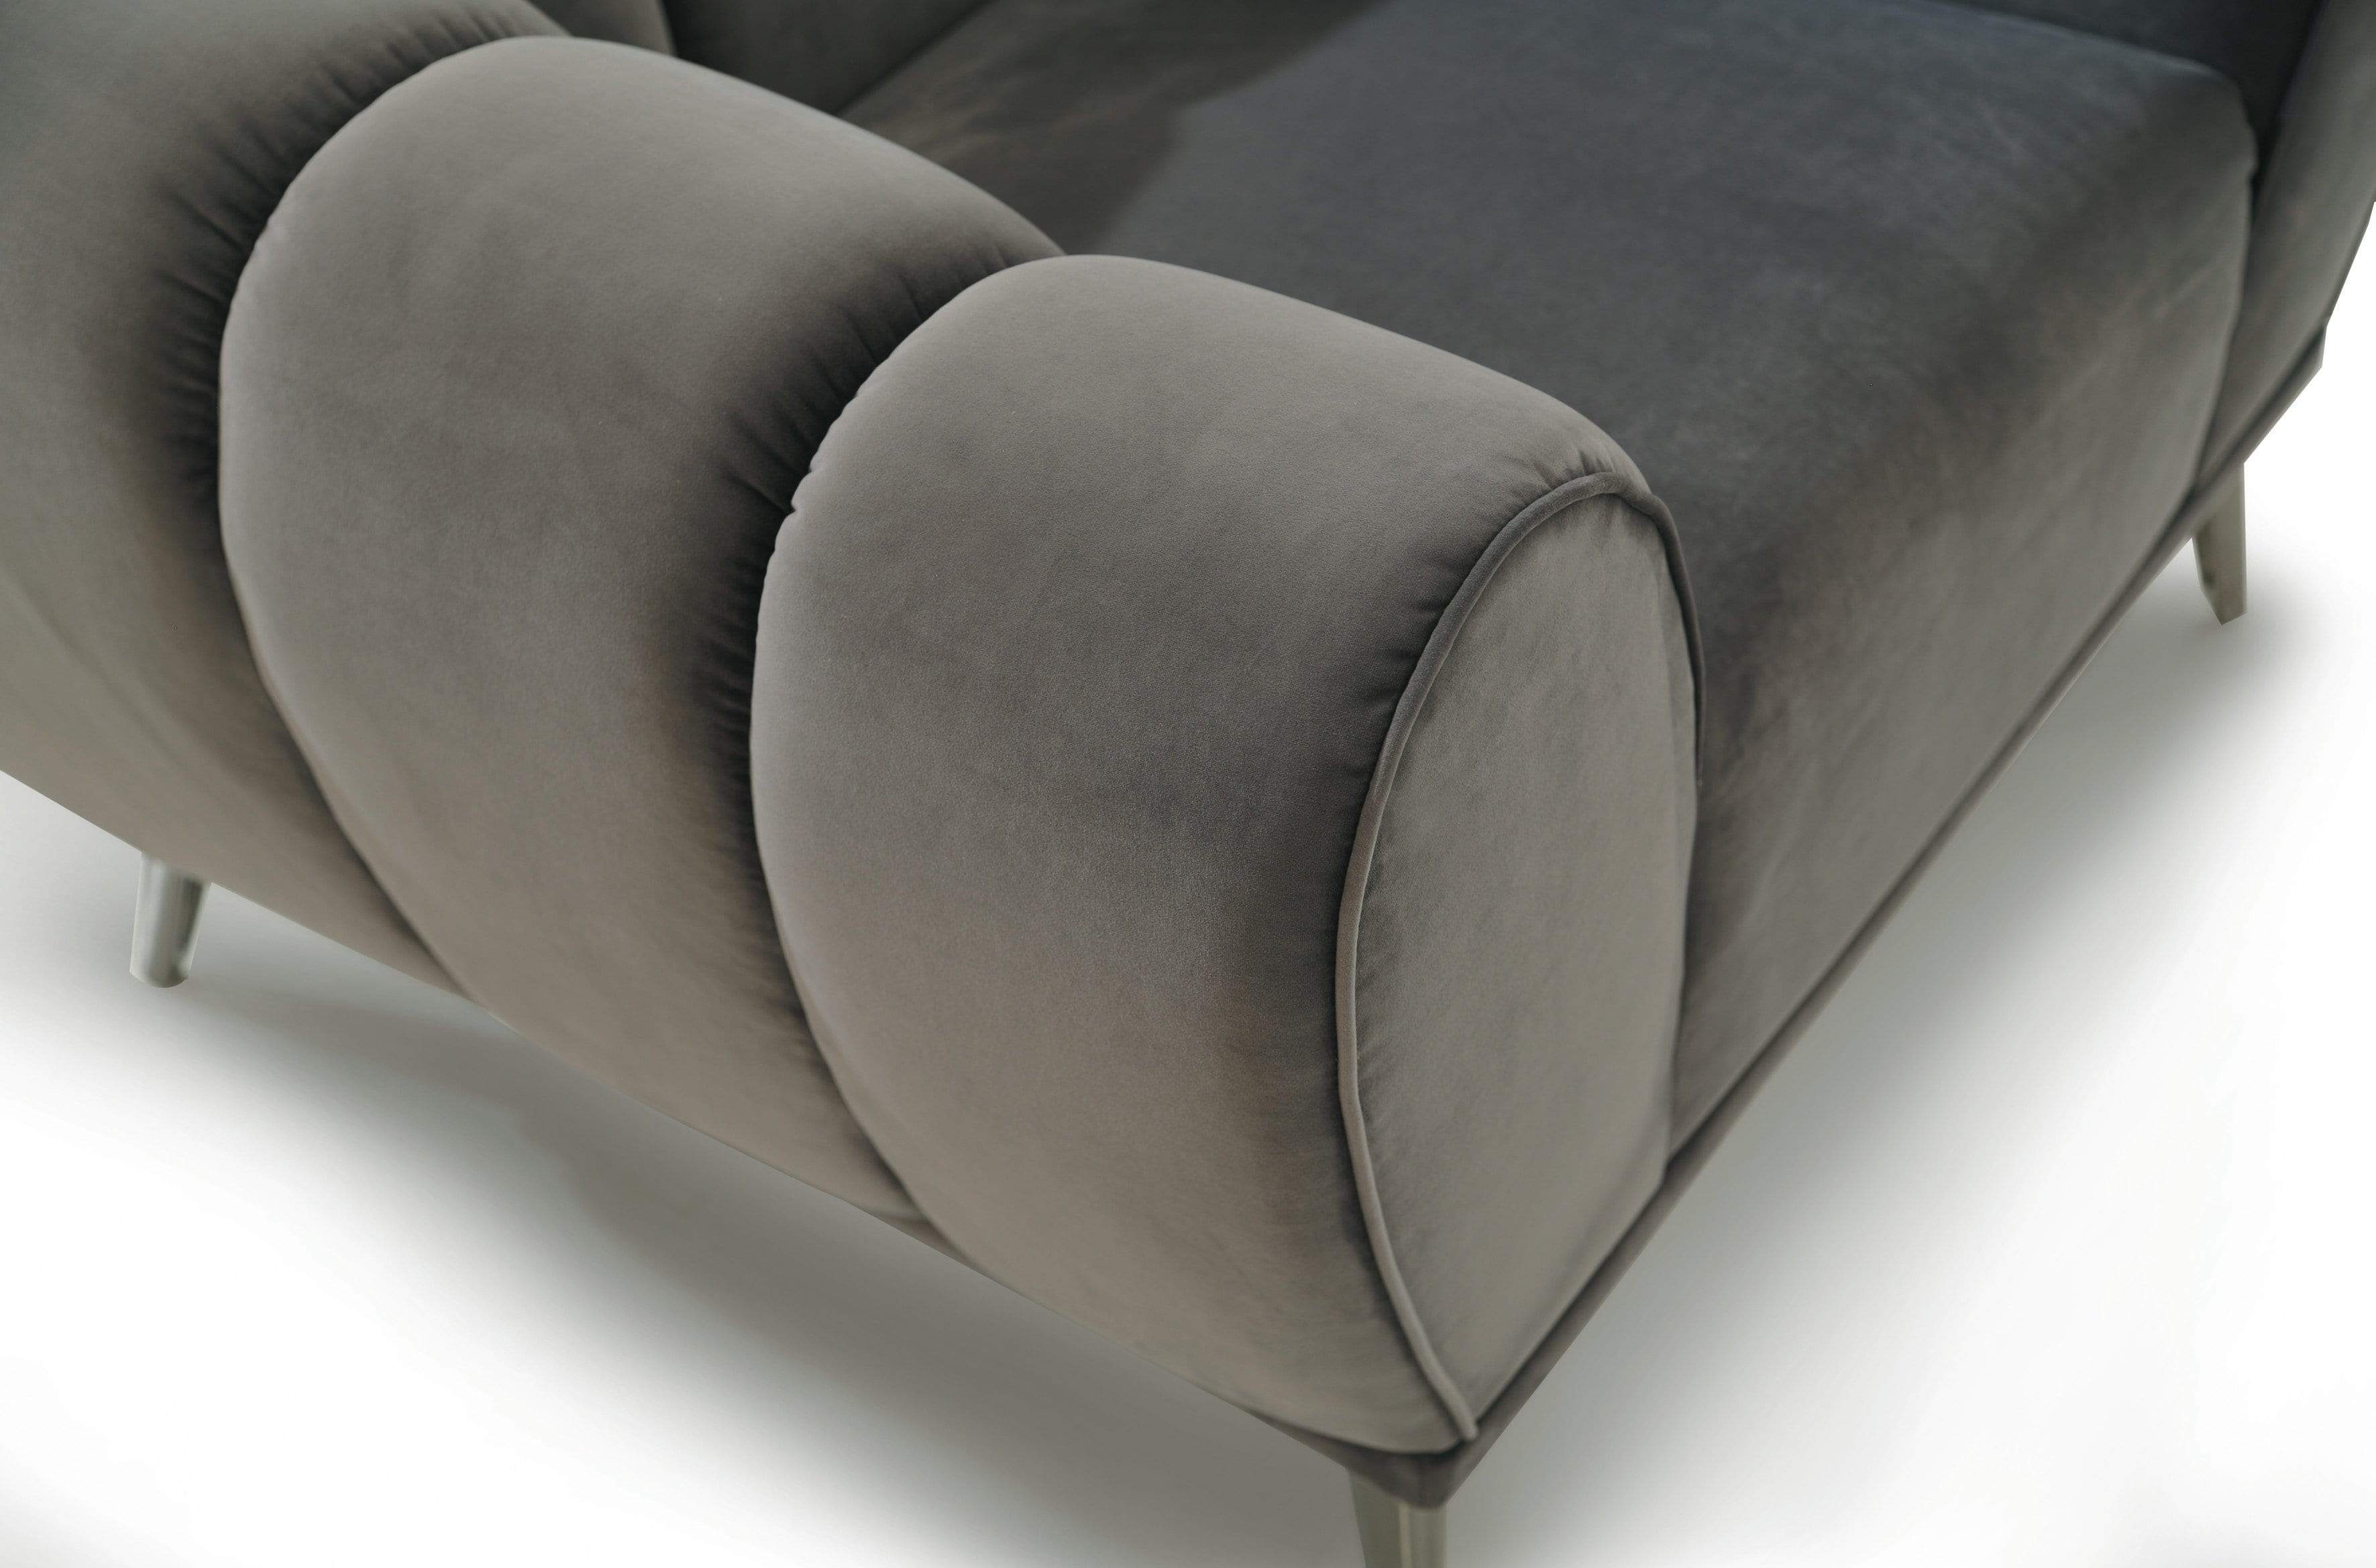 Fedor Sofa Velvet Upholstered Channel-Quilted Shelter Arm Solid Metal Legs